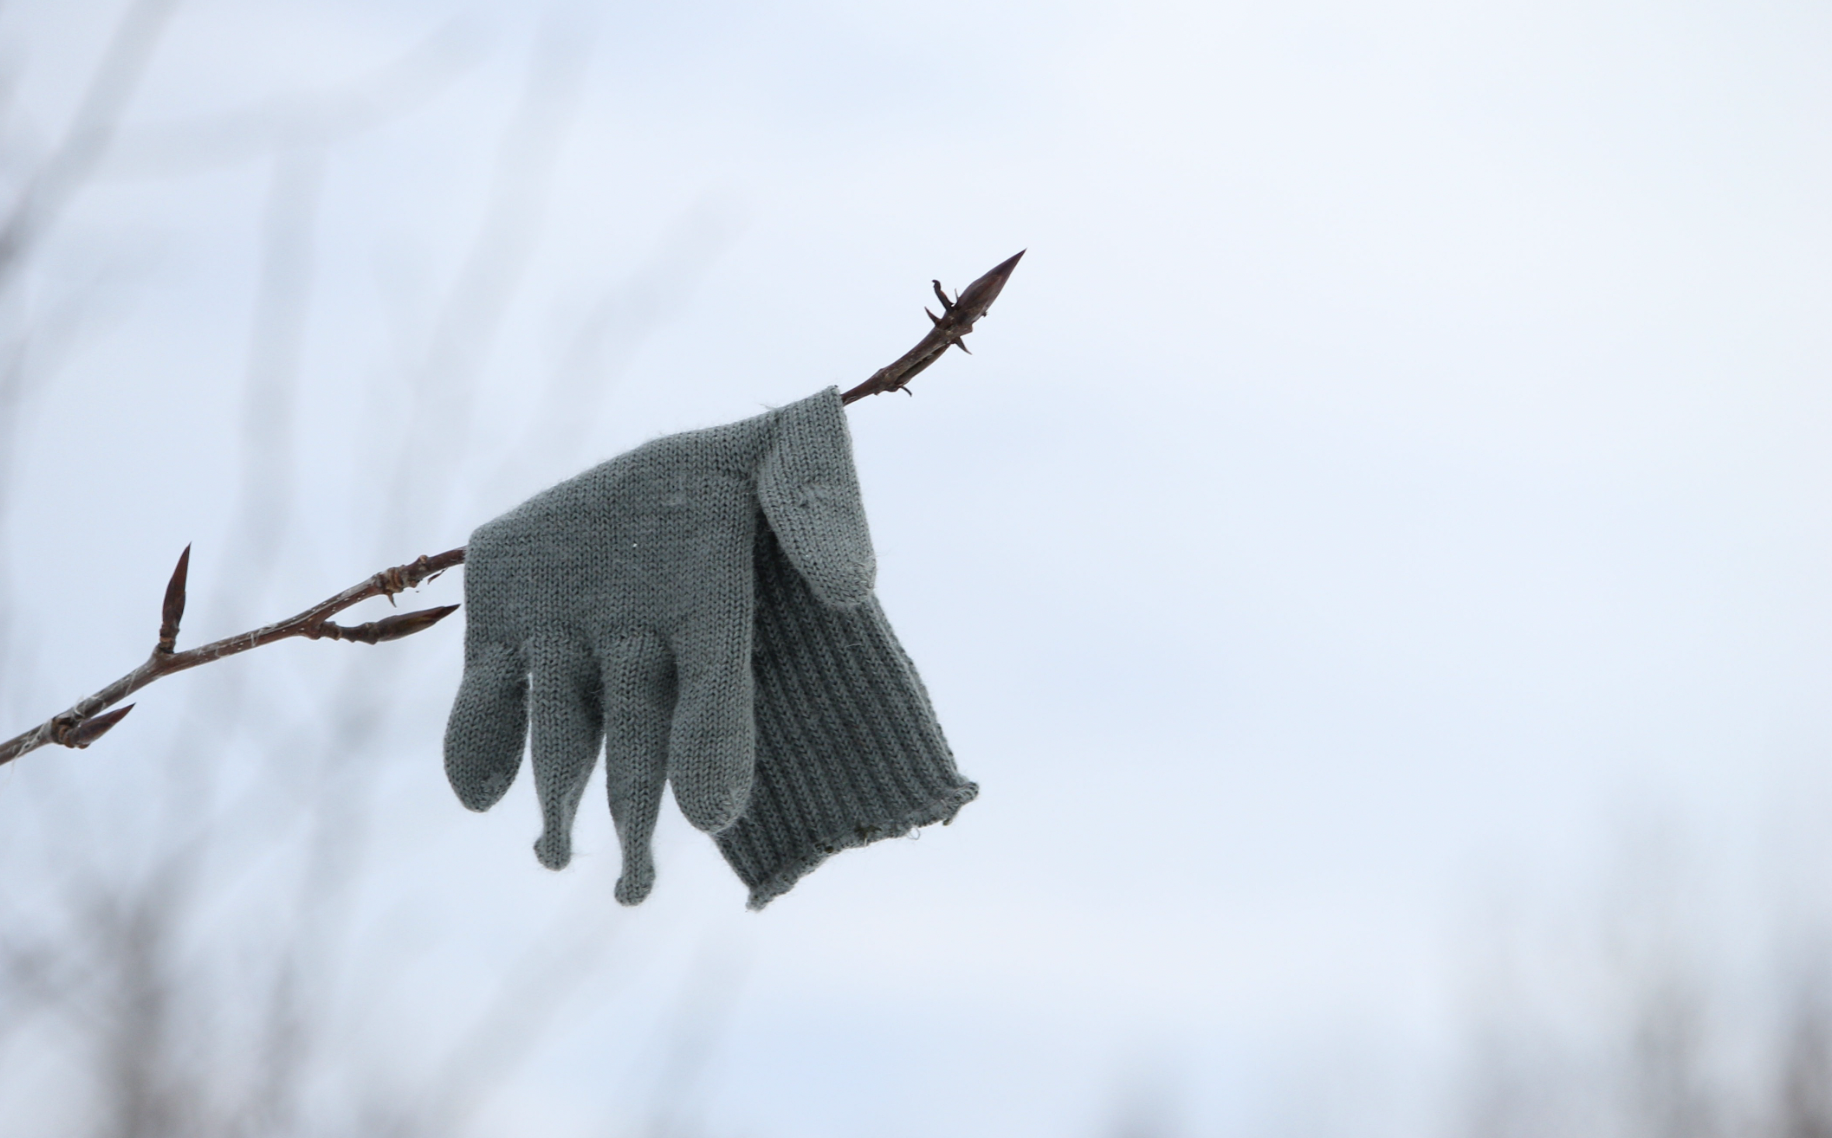 Lost glove hangs on a branch | Source: Shutterstock